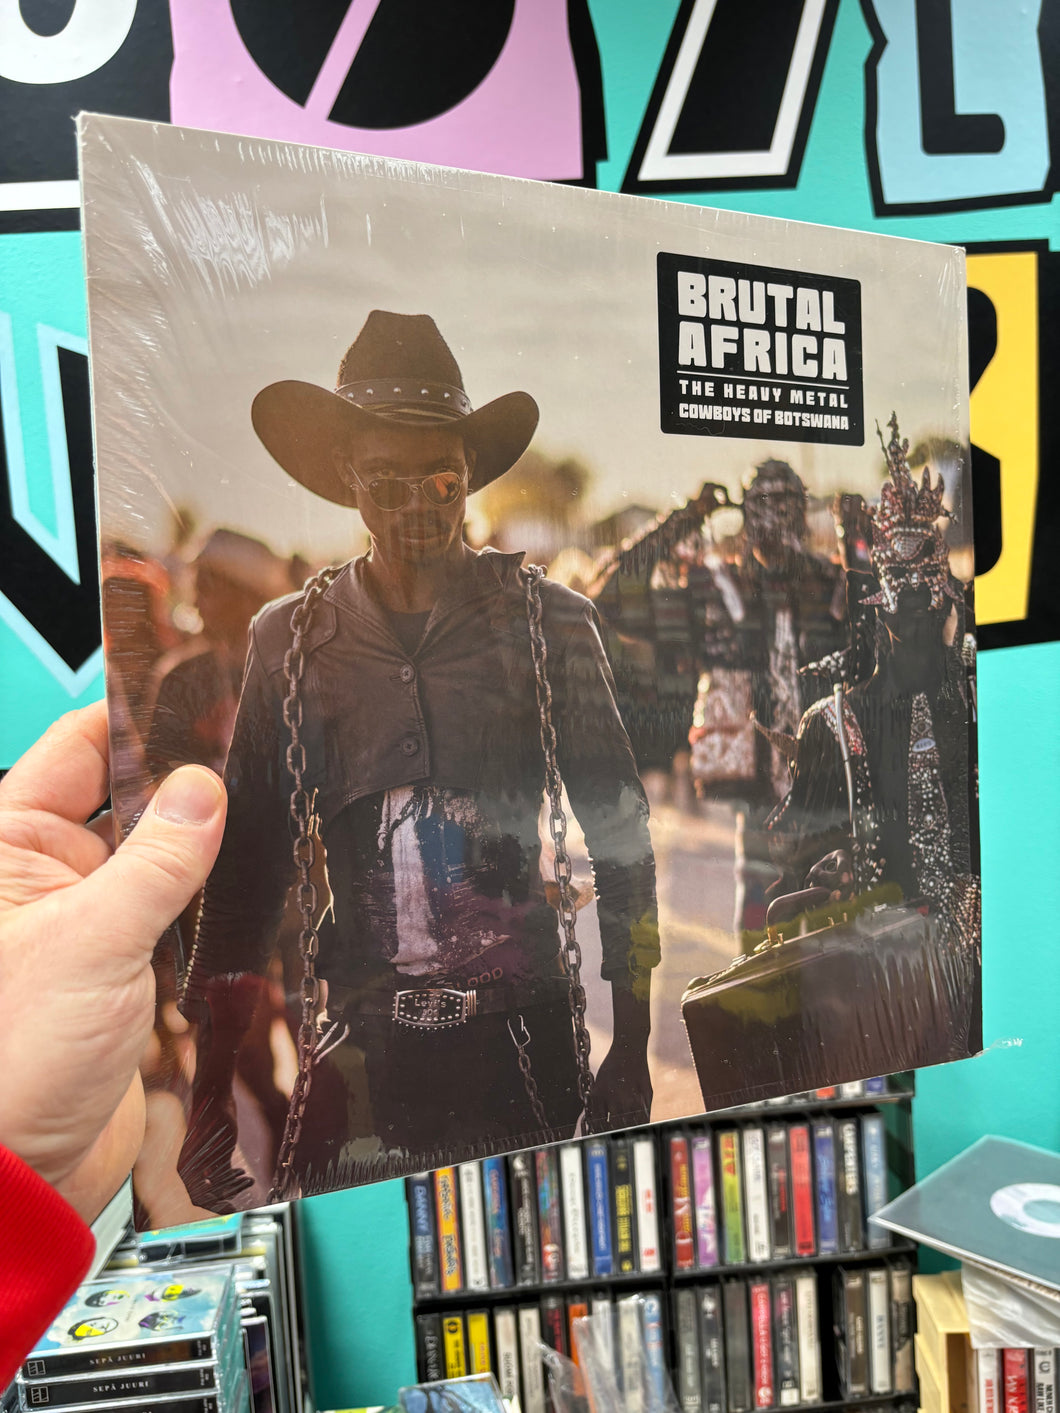 Brutal Africa - The Heavy Metal Cowboys Of Botswana, LP, Finland 2019